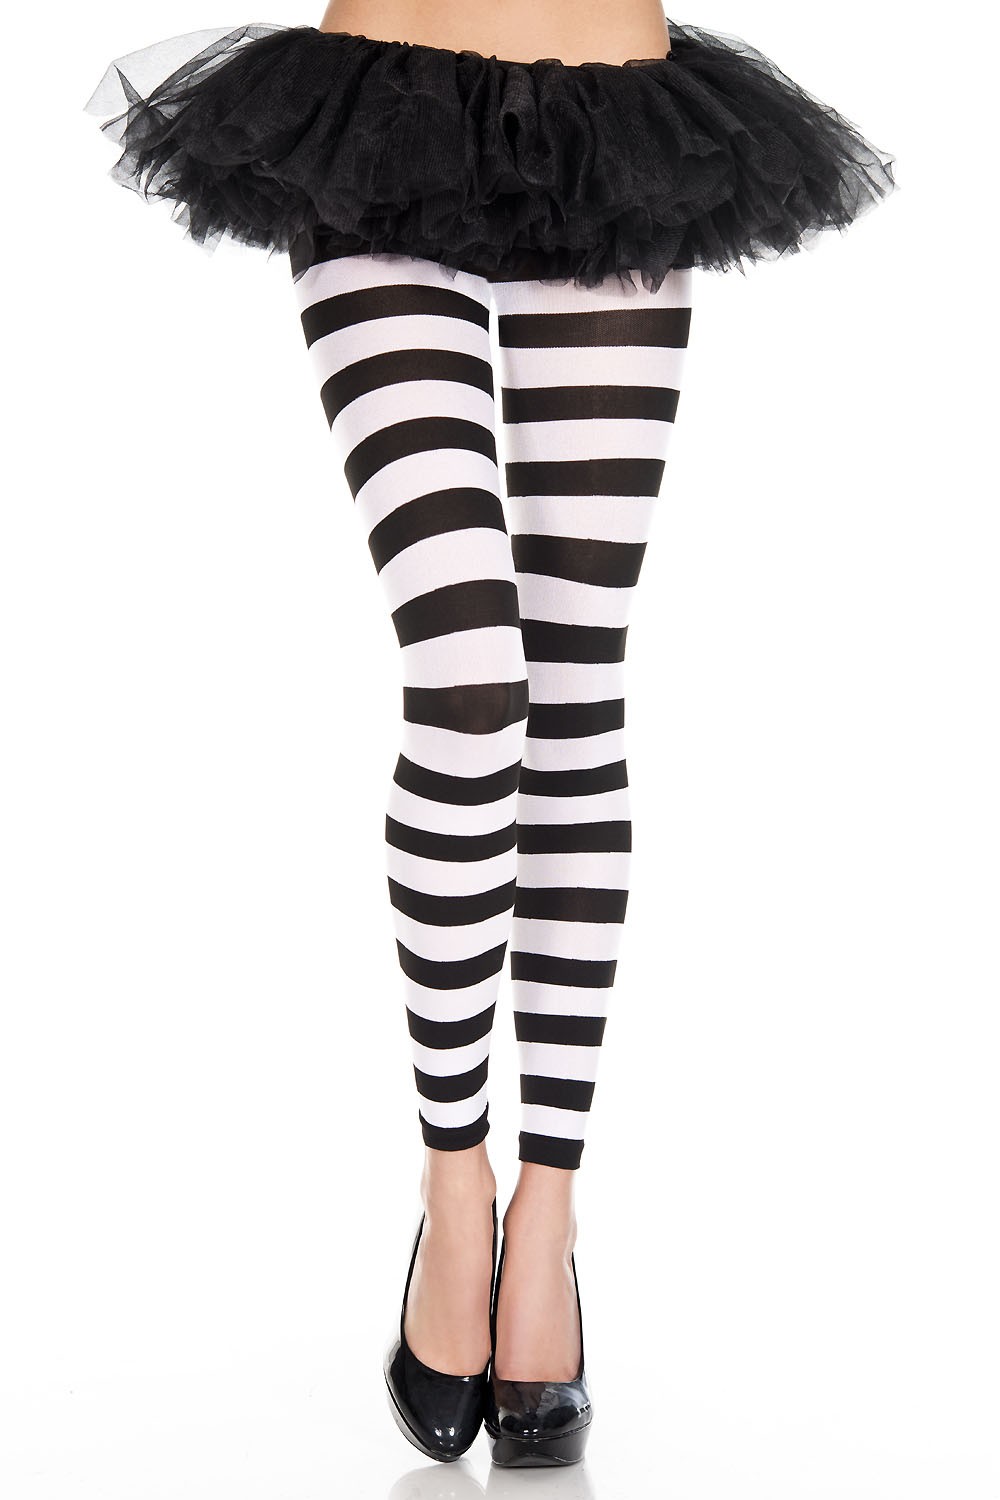 Adult Striped Women Leggings Black And White, $17.99